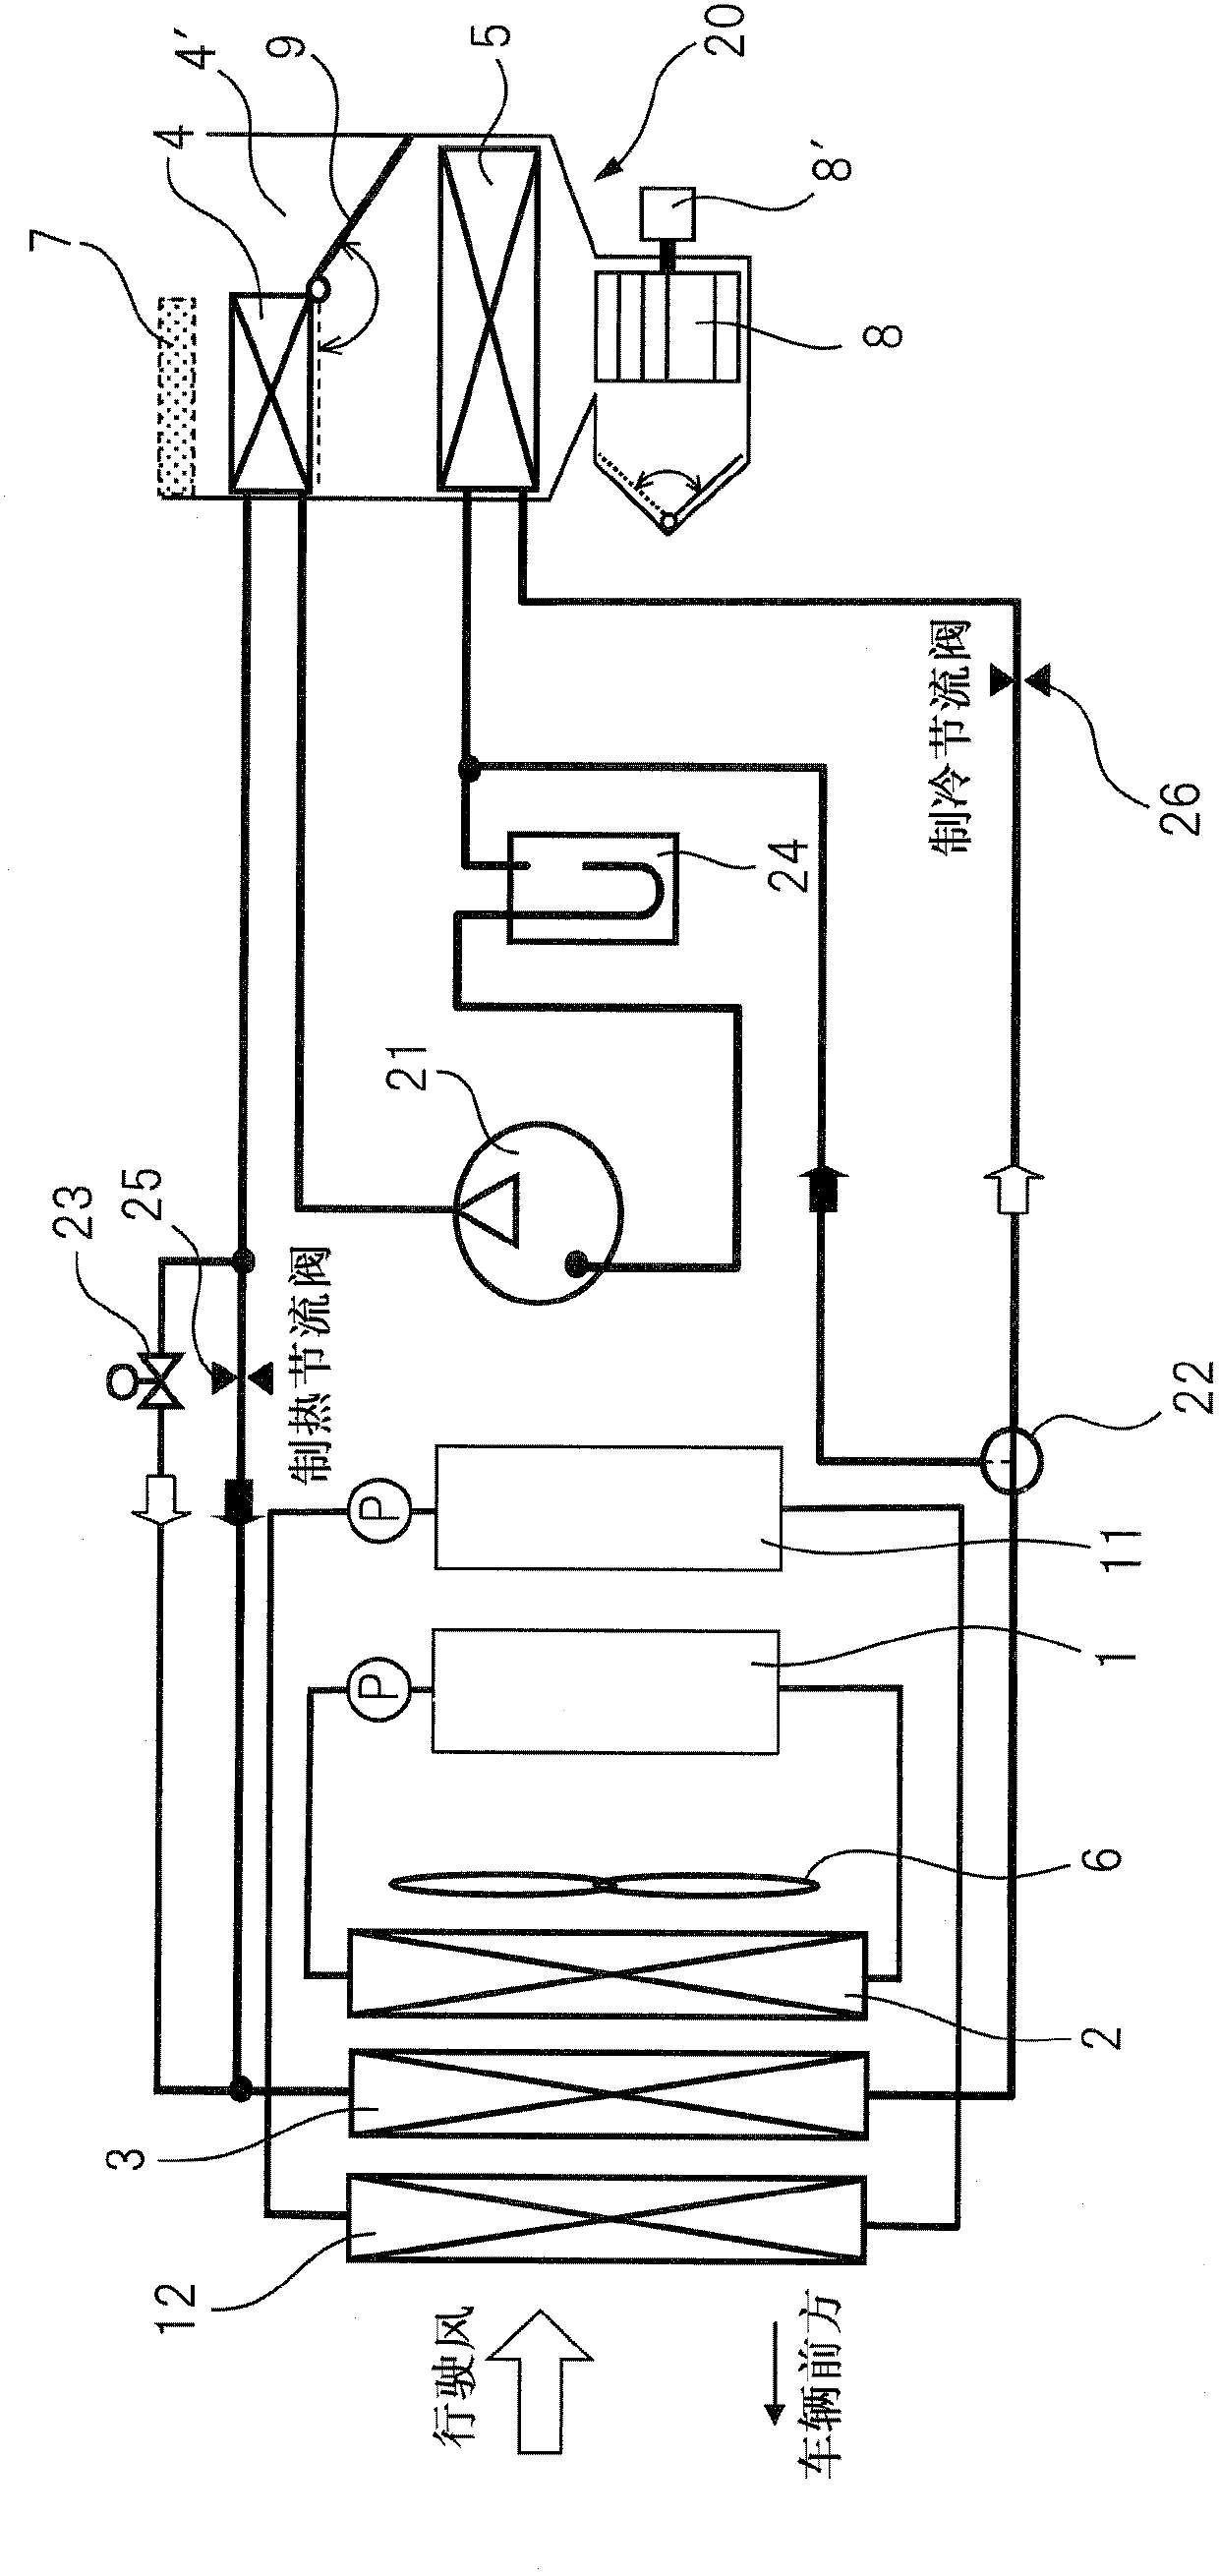 Configuration of vehicle heat exchanger